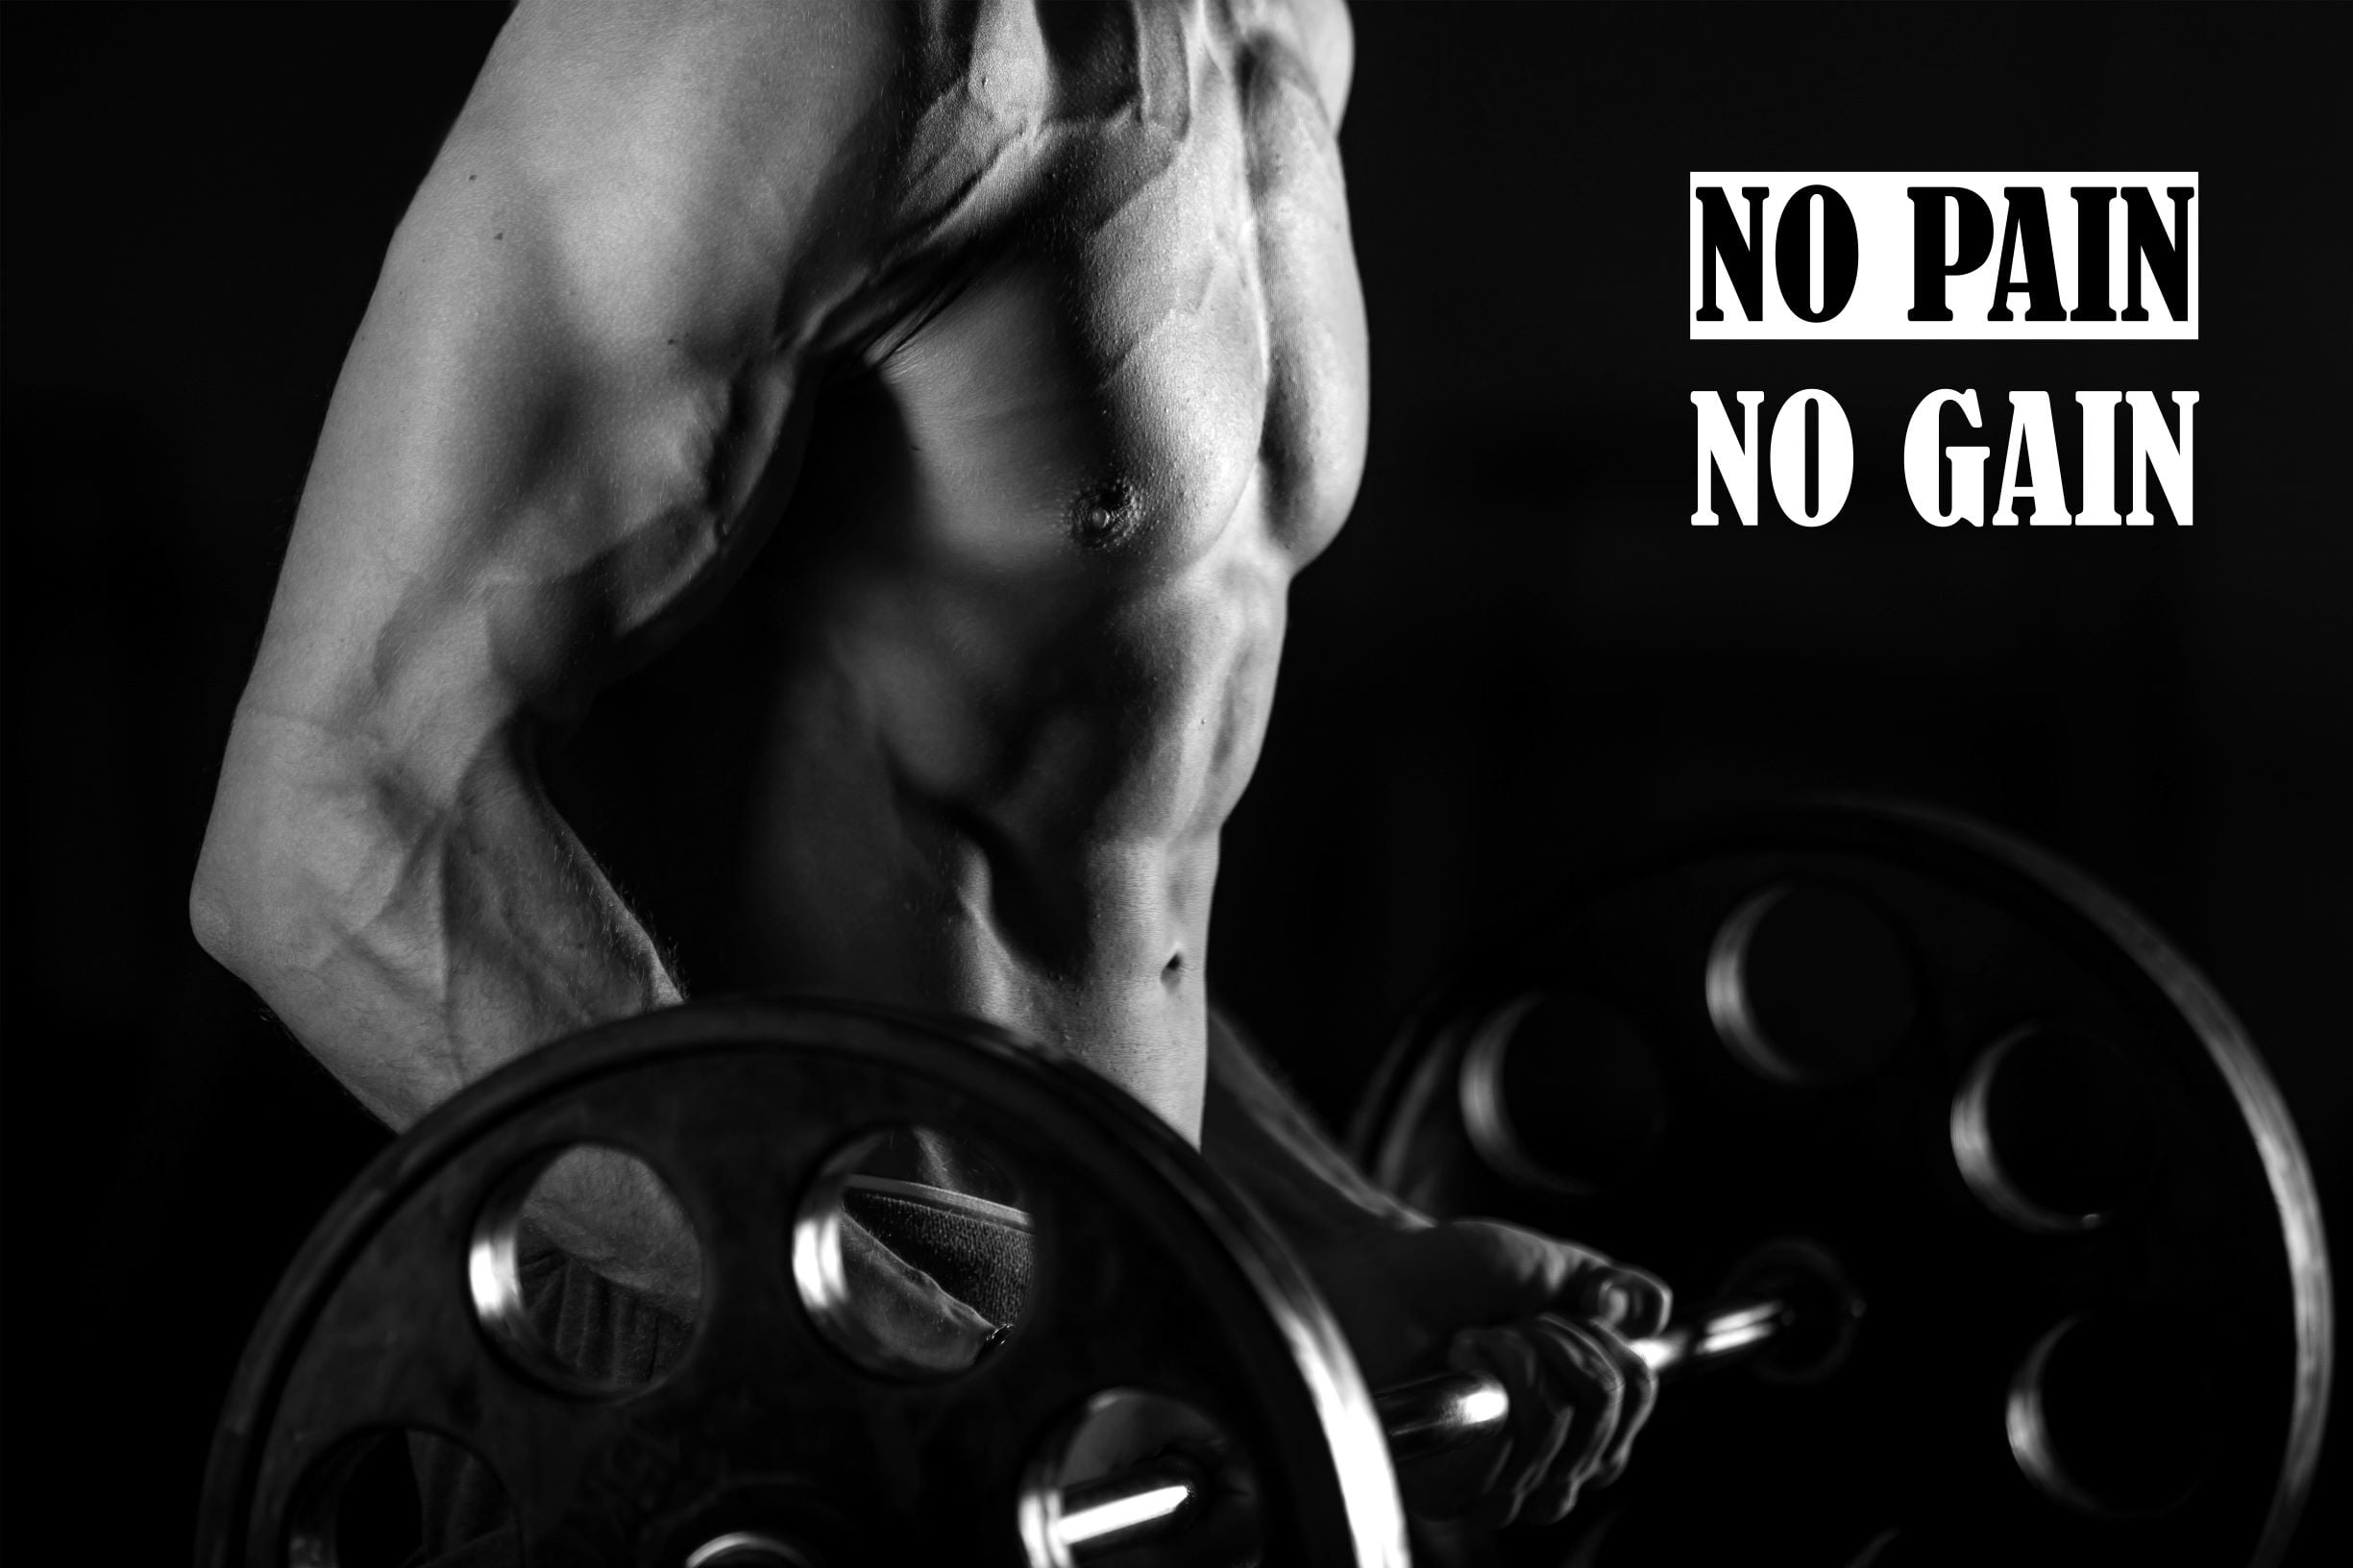 Ezposterprints Bodybuilding Men Girl Fitness Workout Quotes Motivational Inspirational Muscle